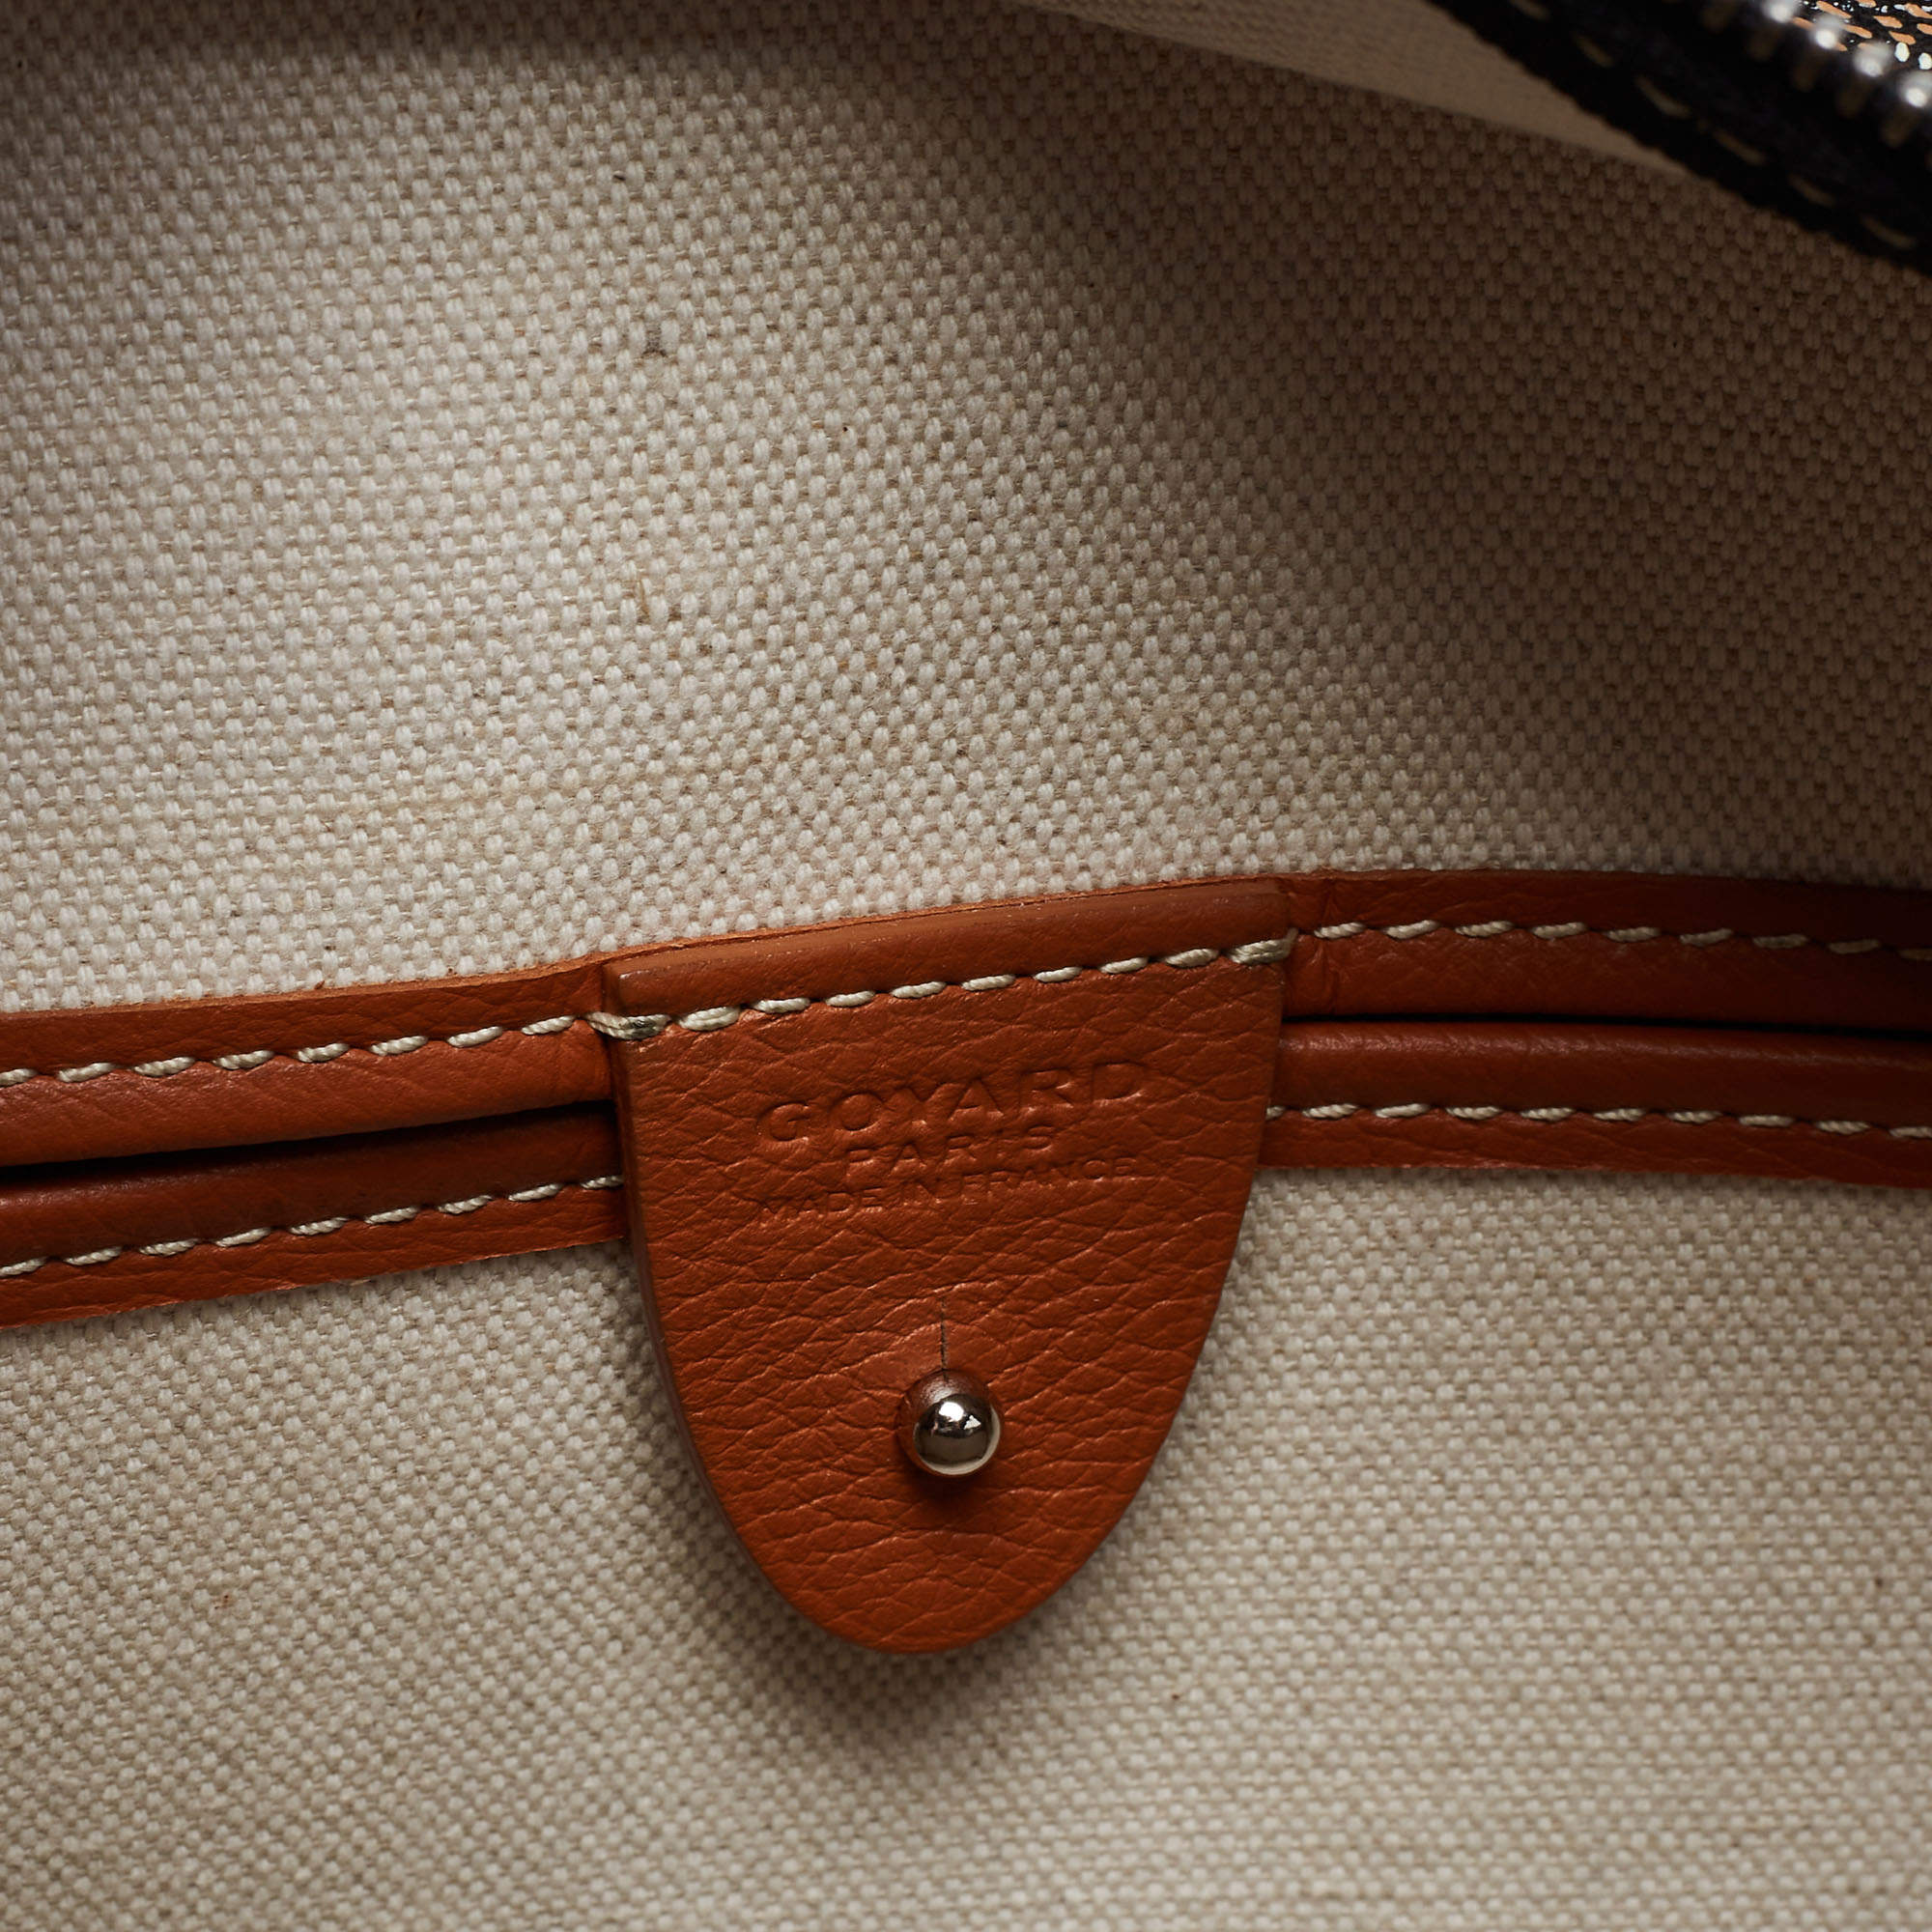 Goyard Artois Tote Coated Leather Canvas MM Handbag In Aqua Blue RRP £2500